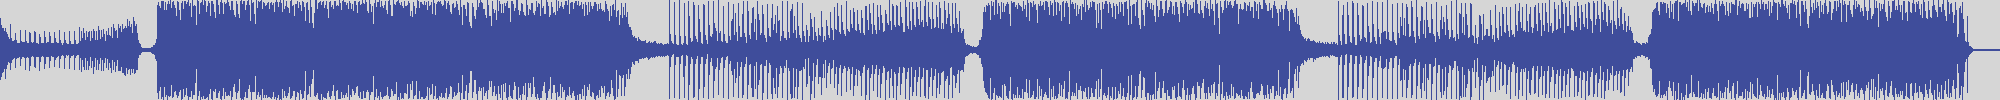 nf_boyz_records [NFY024] Robert Cordoba - Faster [Original Mix] audio wave form